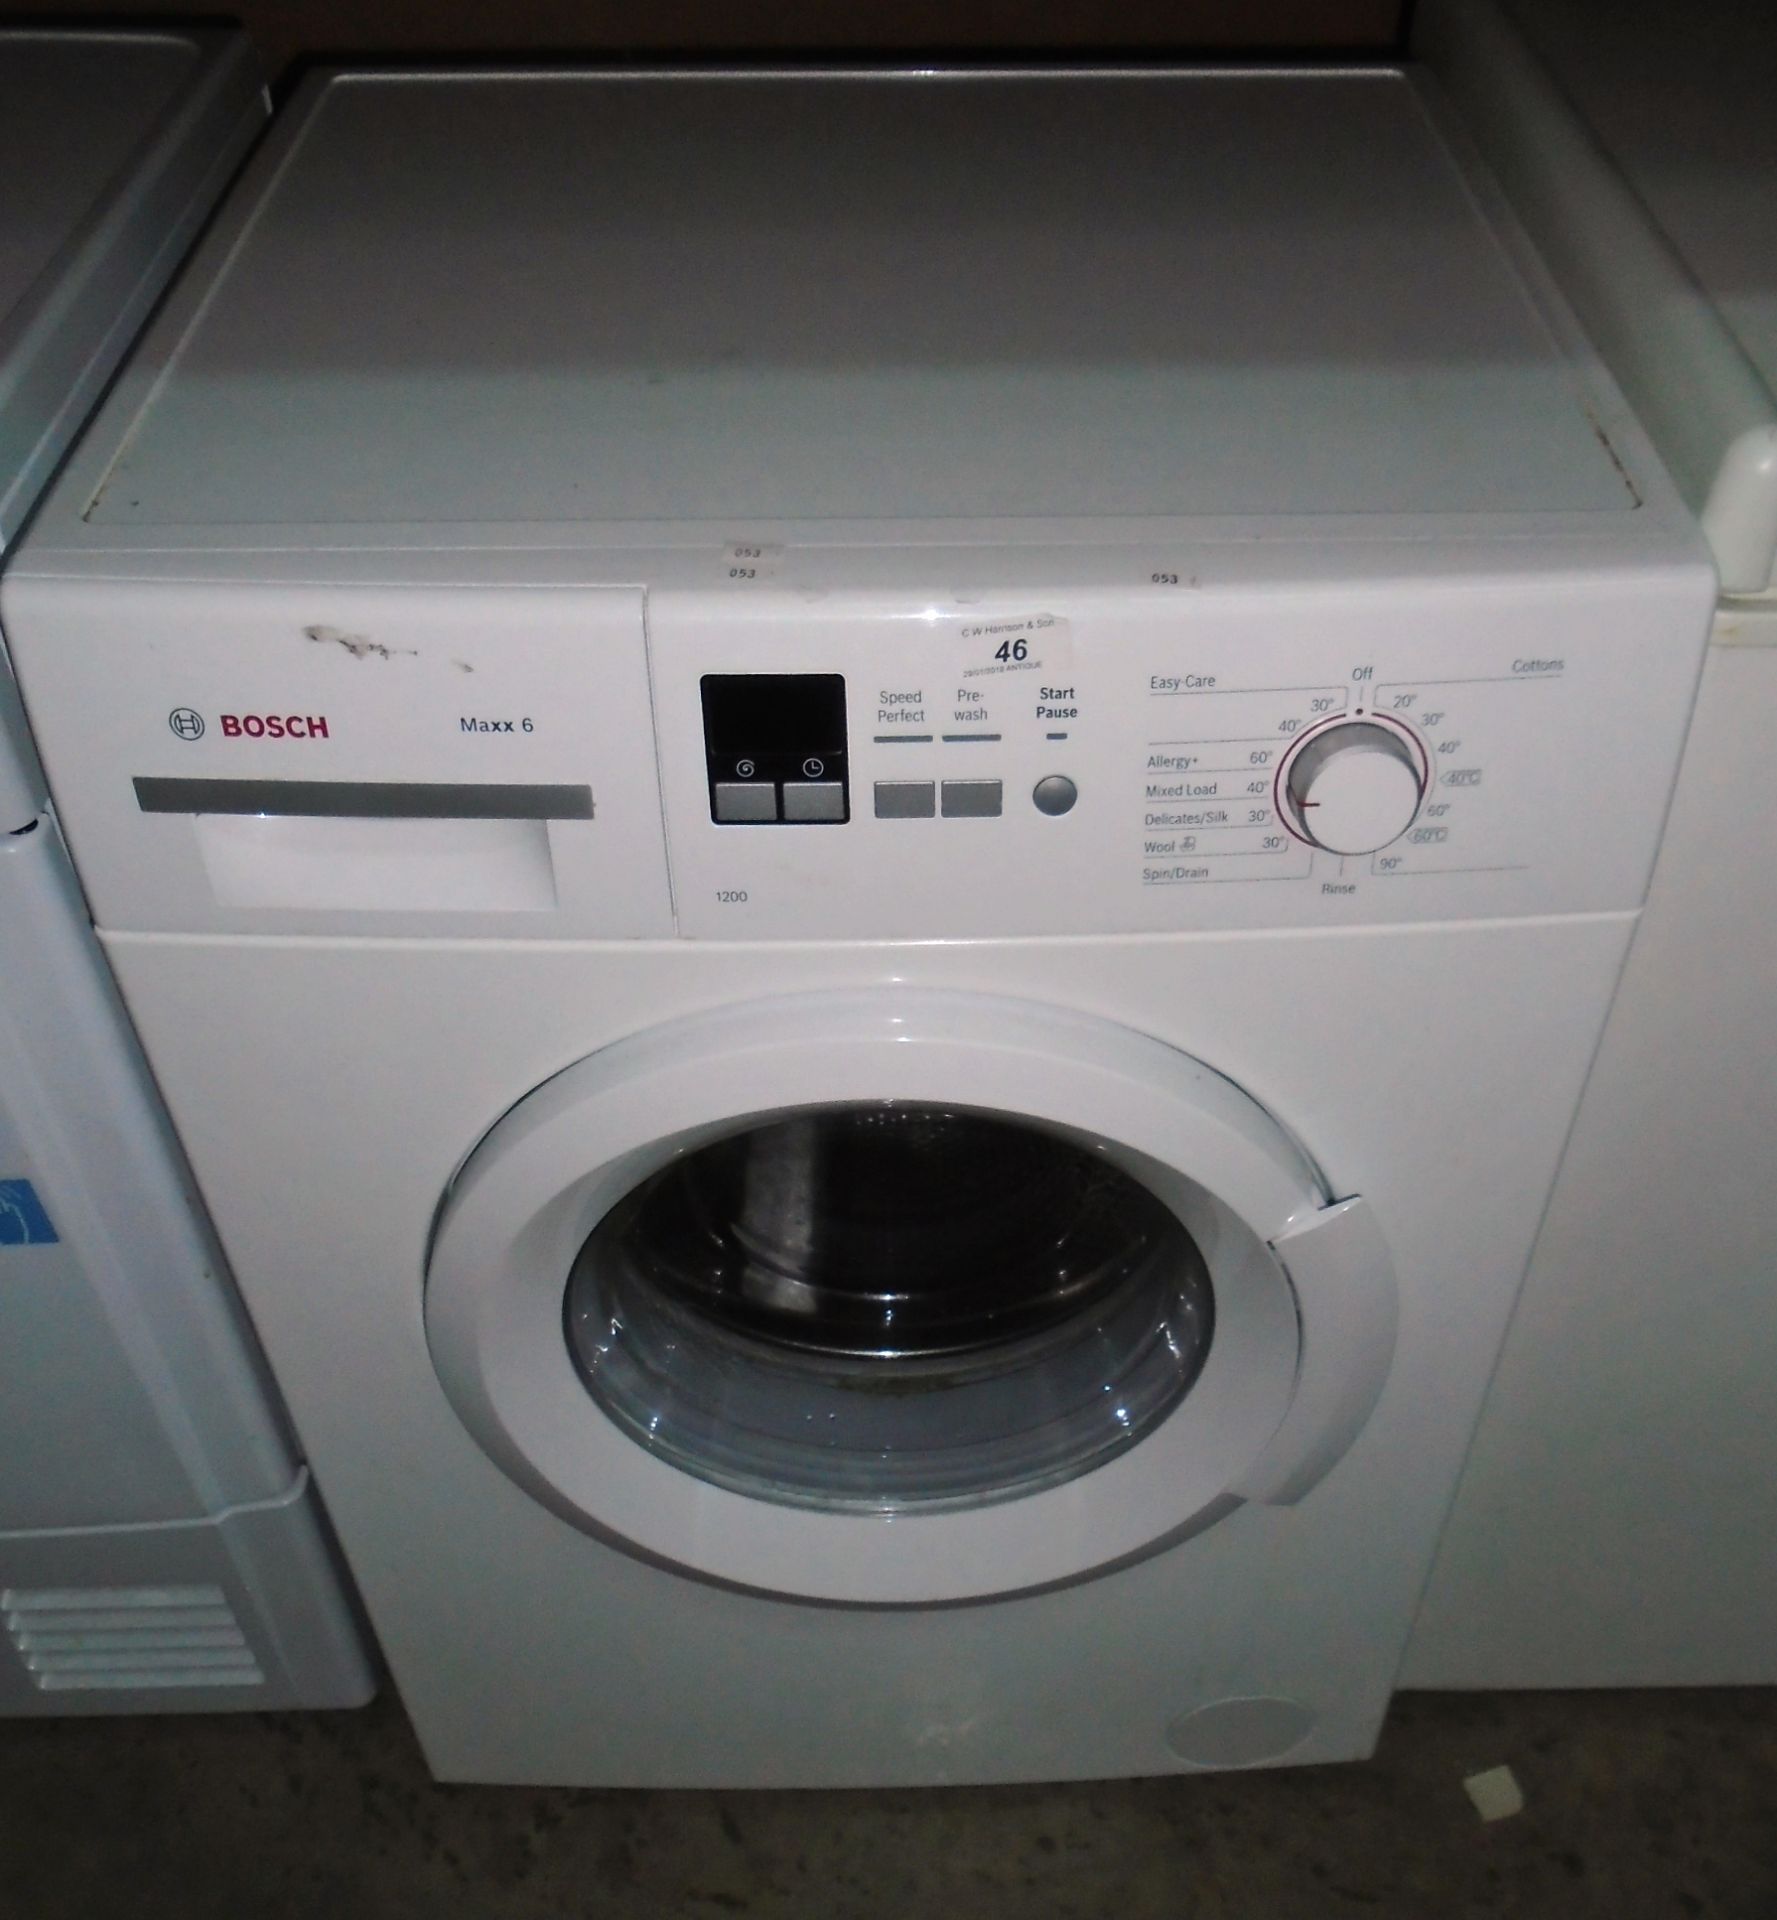 A Bosch Maxx6 1200 washing machine